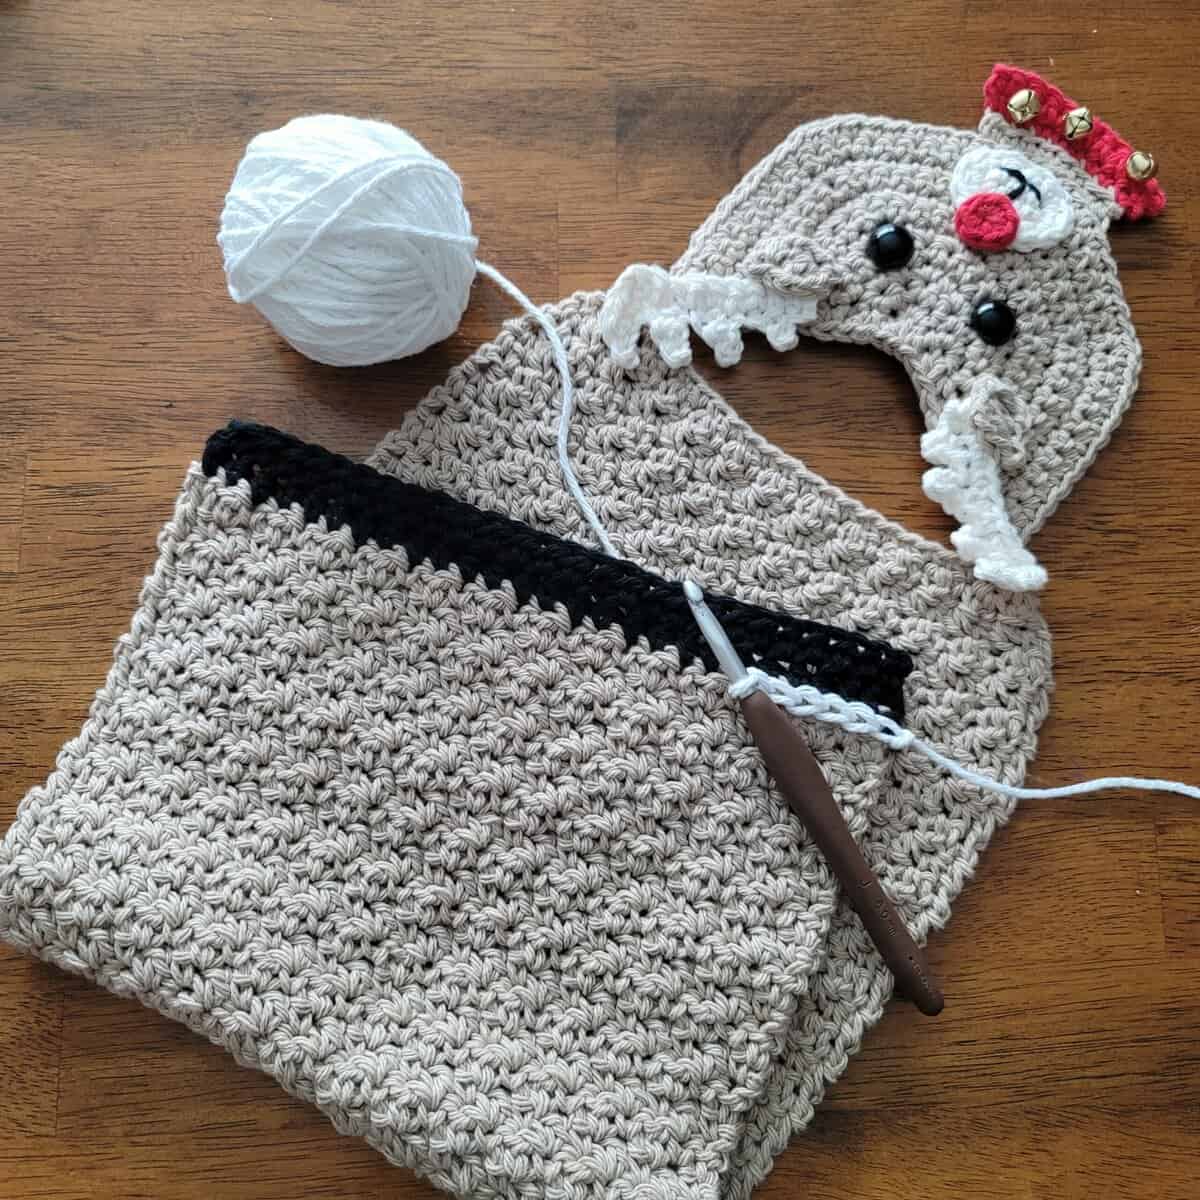 Crochet surface crochet across the top of the reindeer\'s hooves.